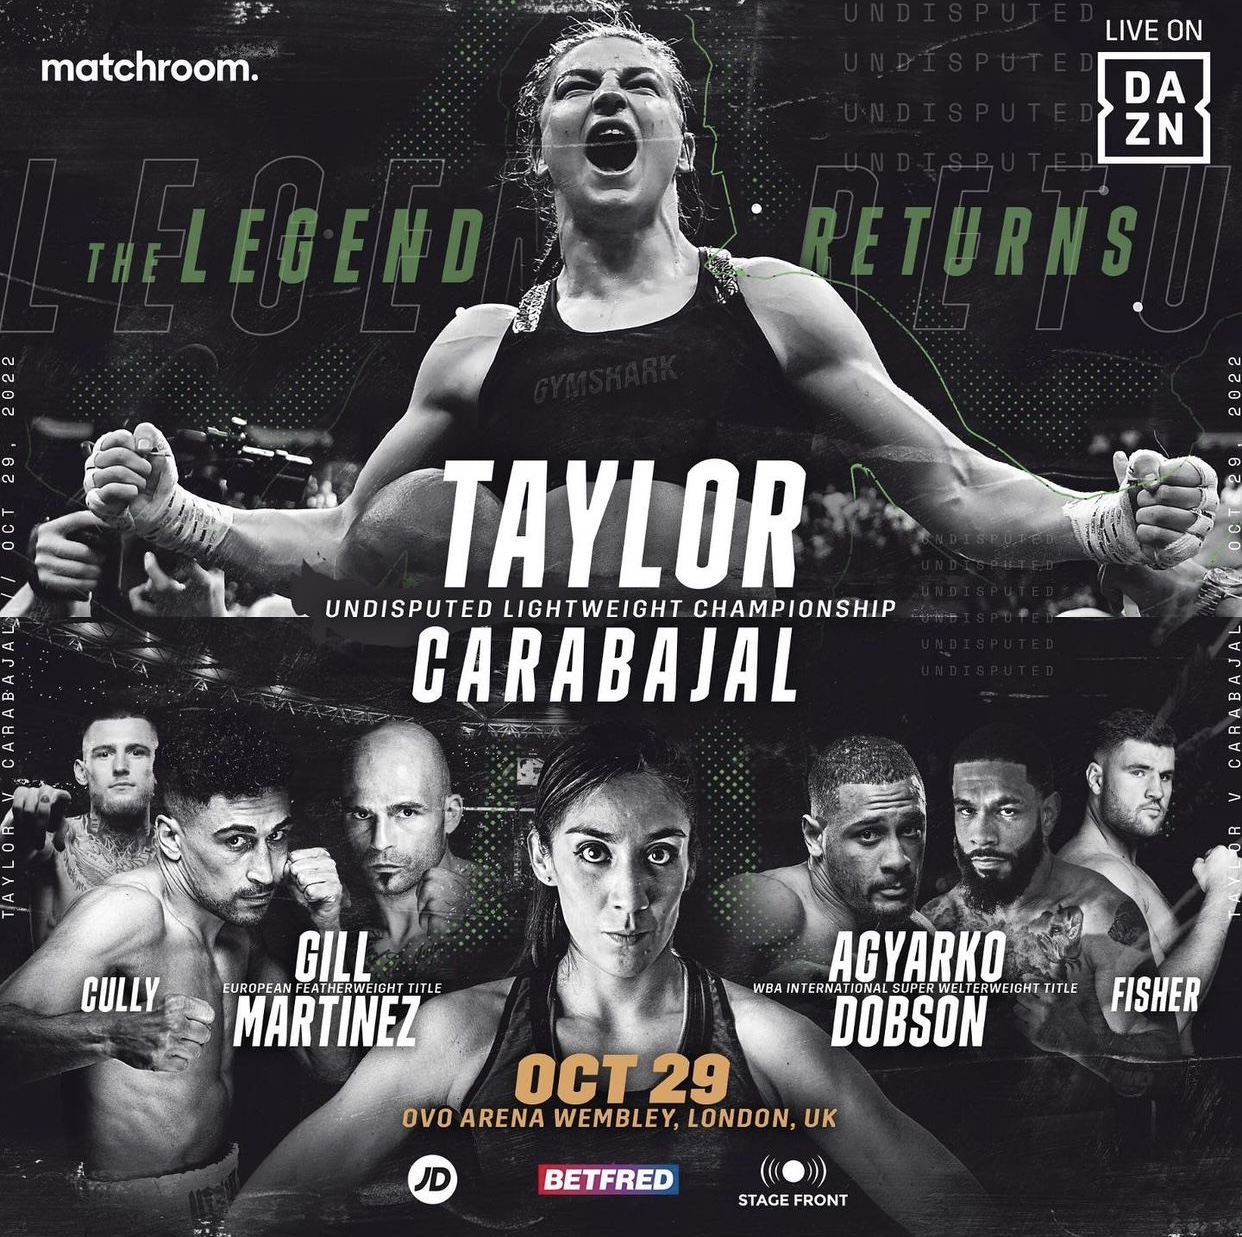 Taylor-Carabajal is official